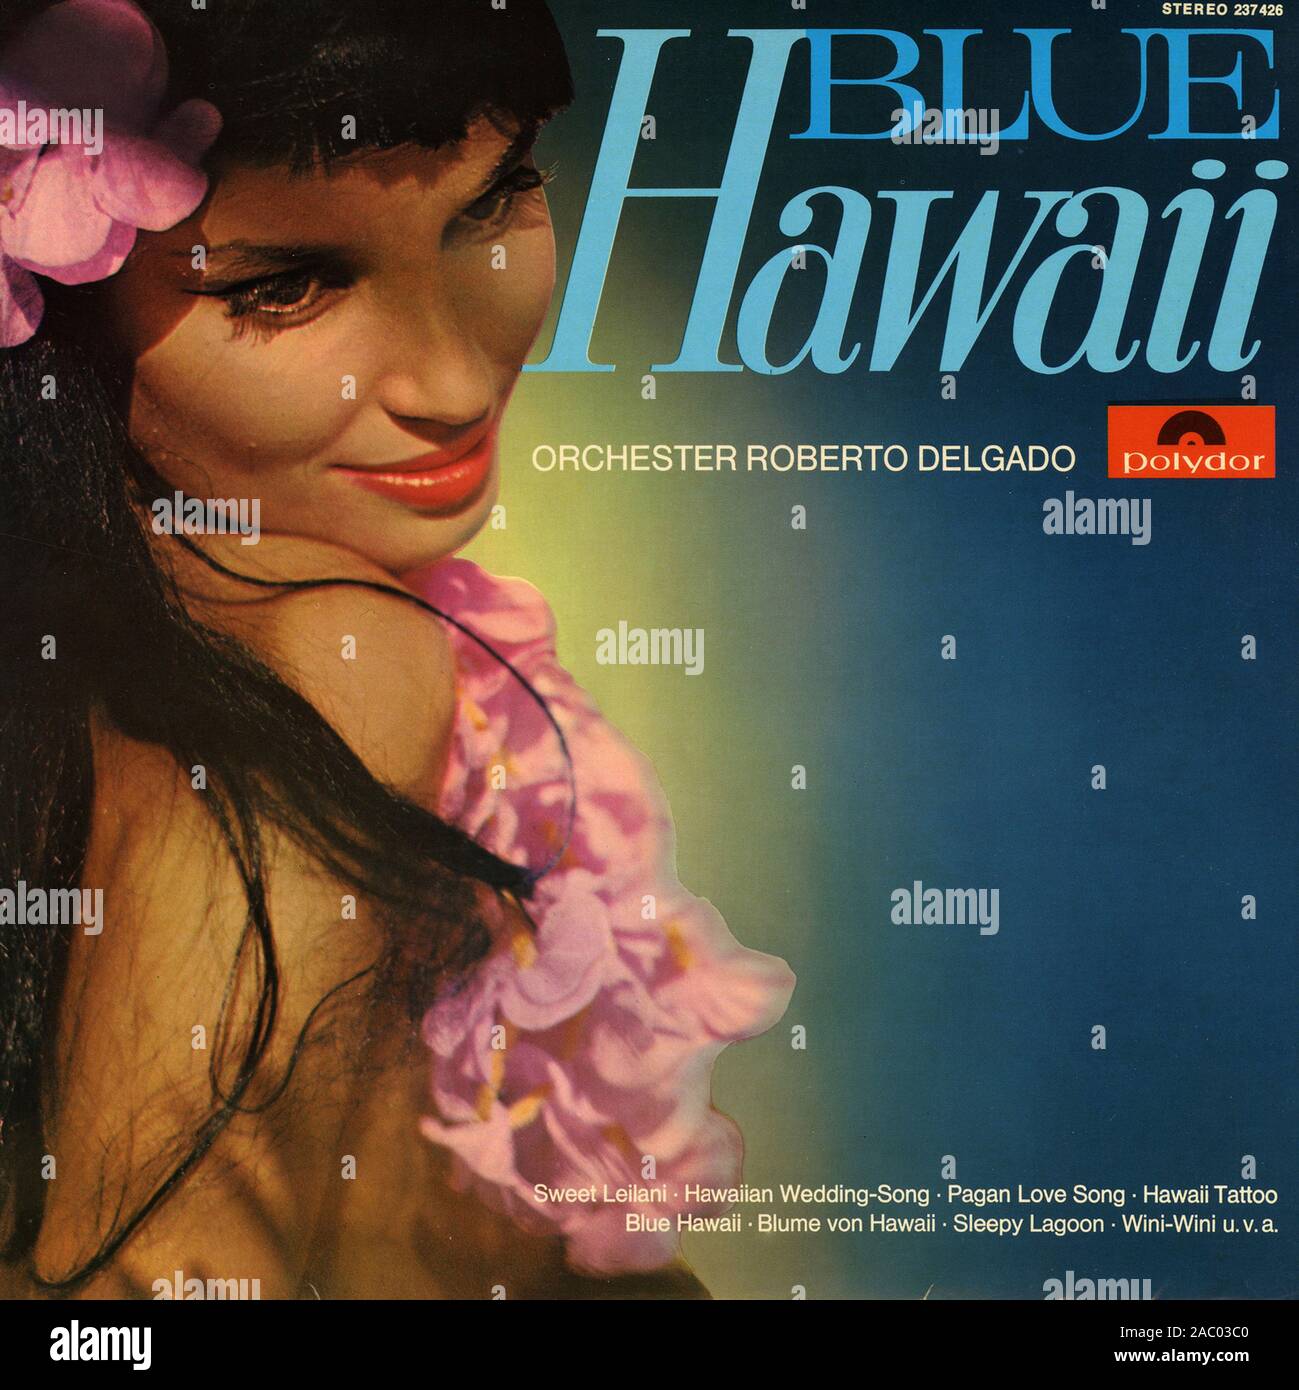 Blue Hawaii  - Vintage vinyl album cover Stock Photo